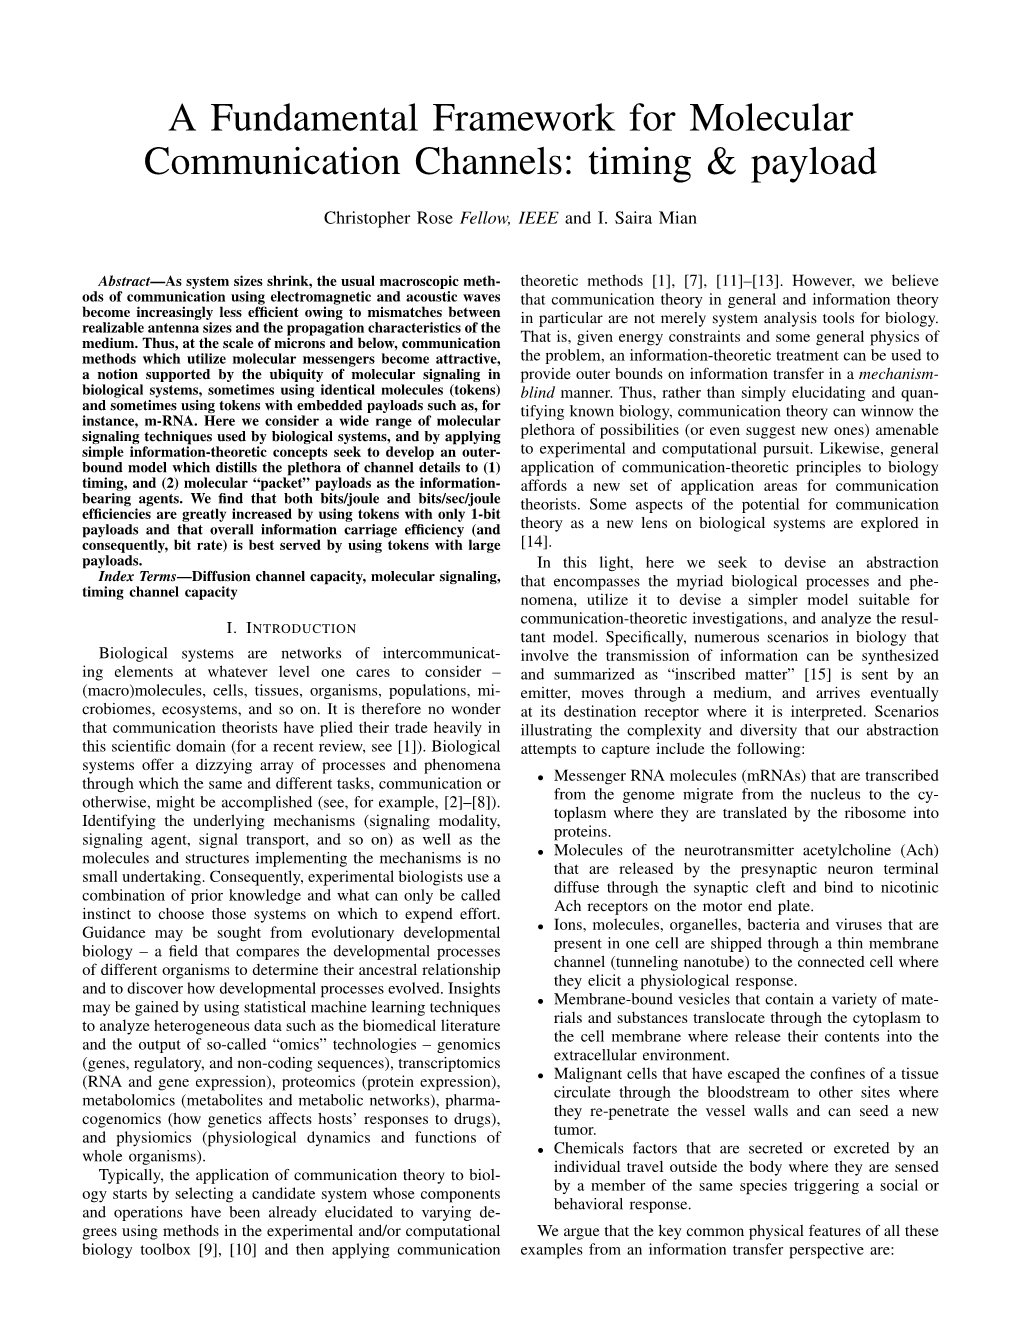 A Fundamental Framework for Molecular Communication Channels: Timing & Payload